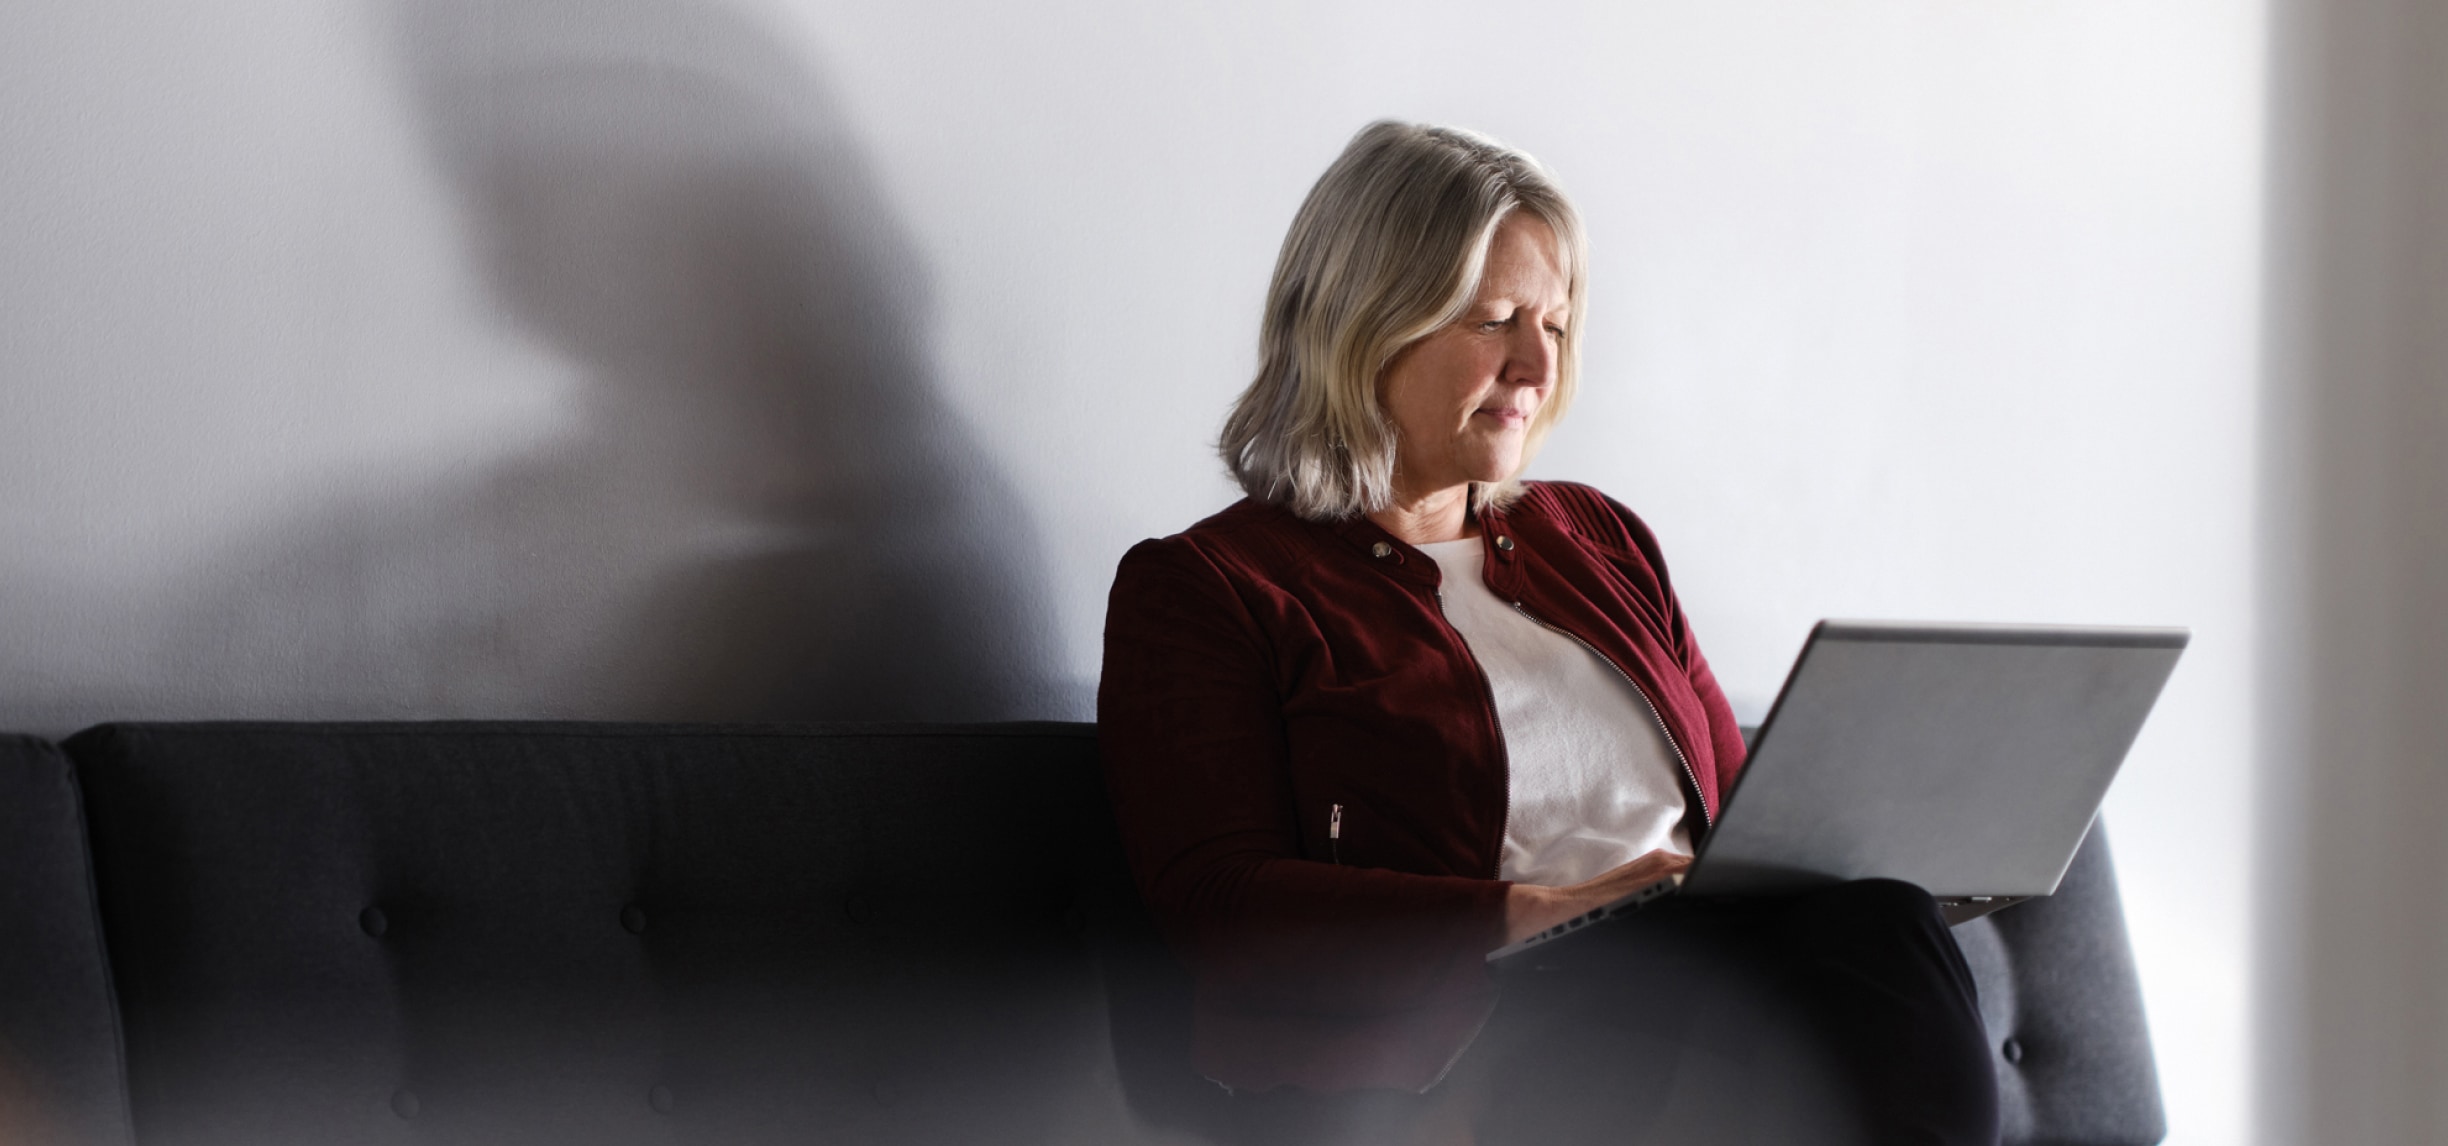 A woman on a black sofa using a laptop